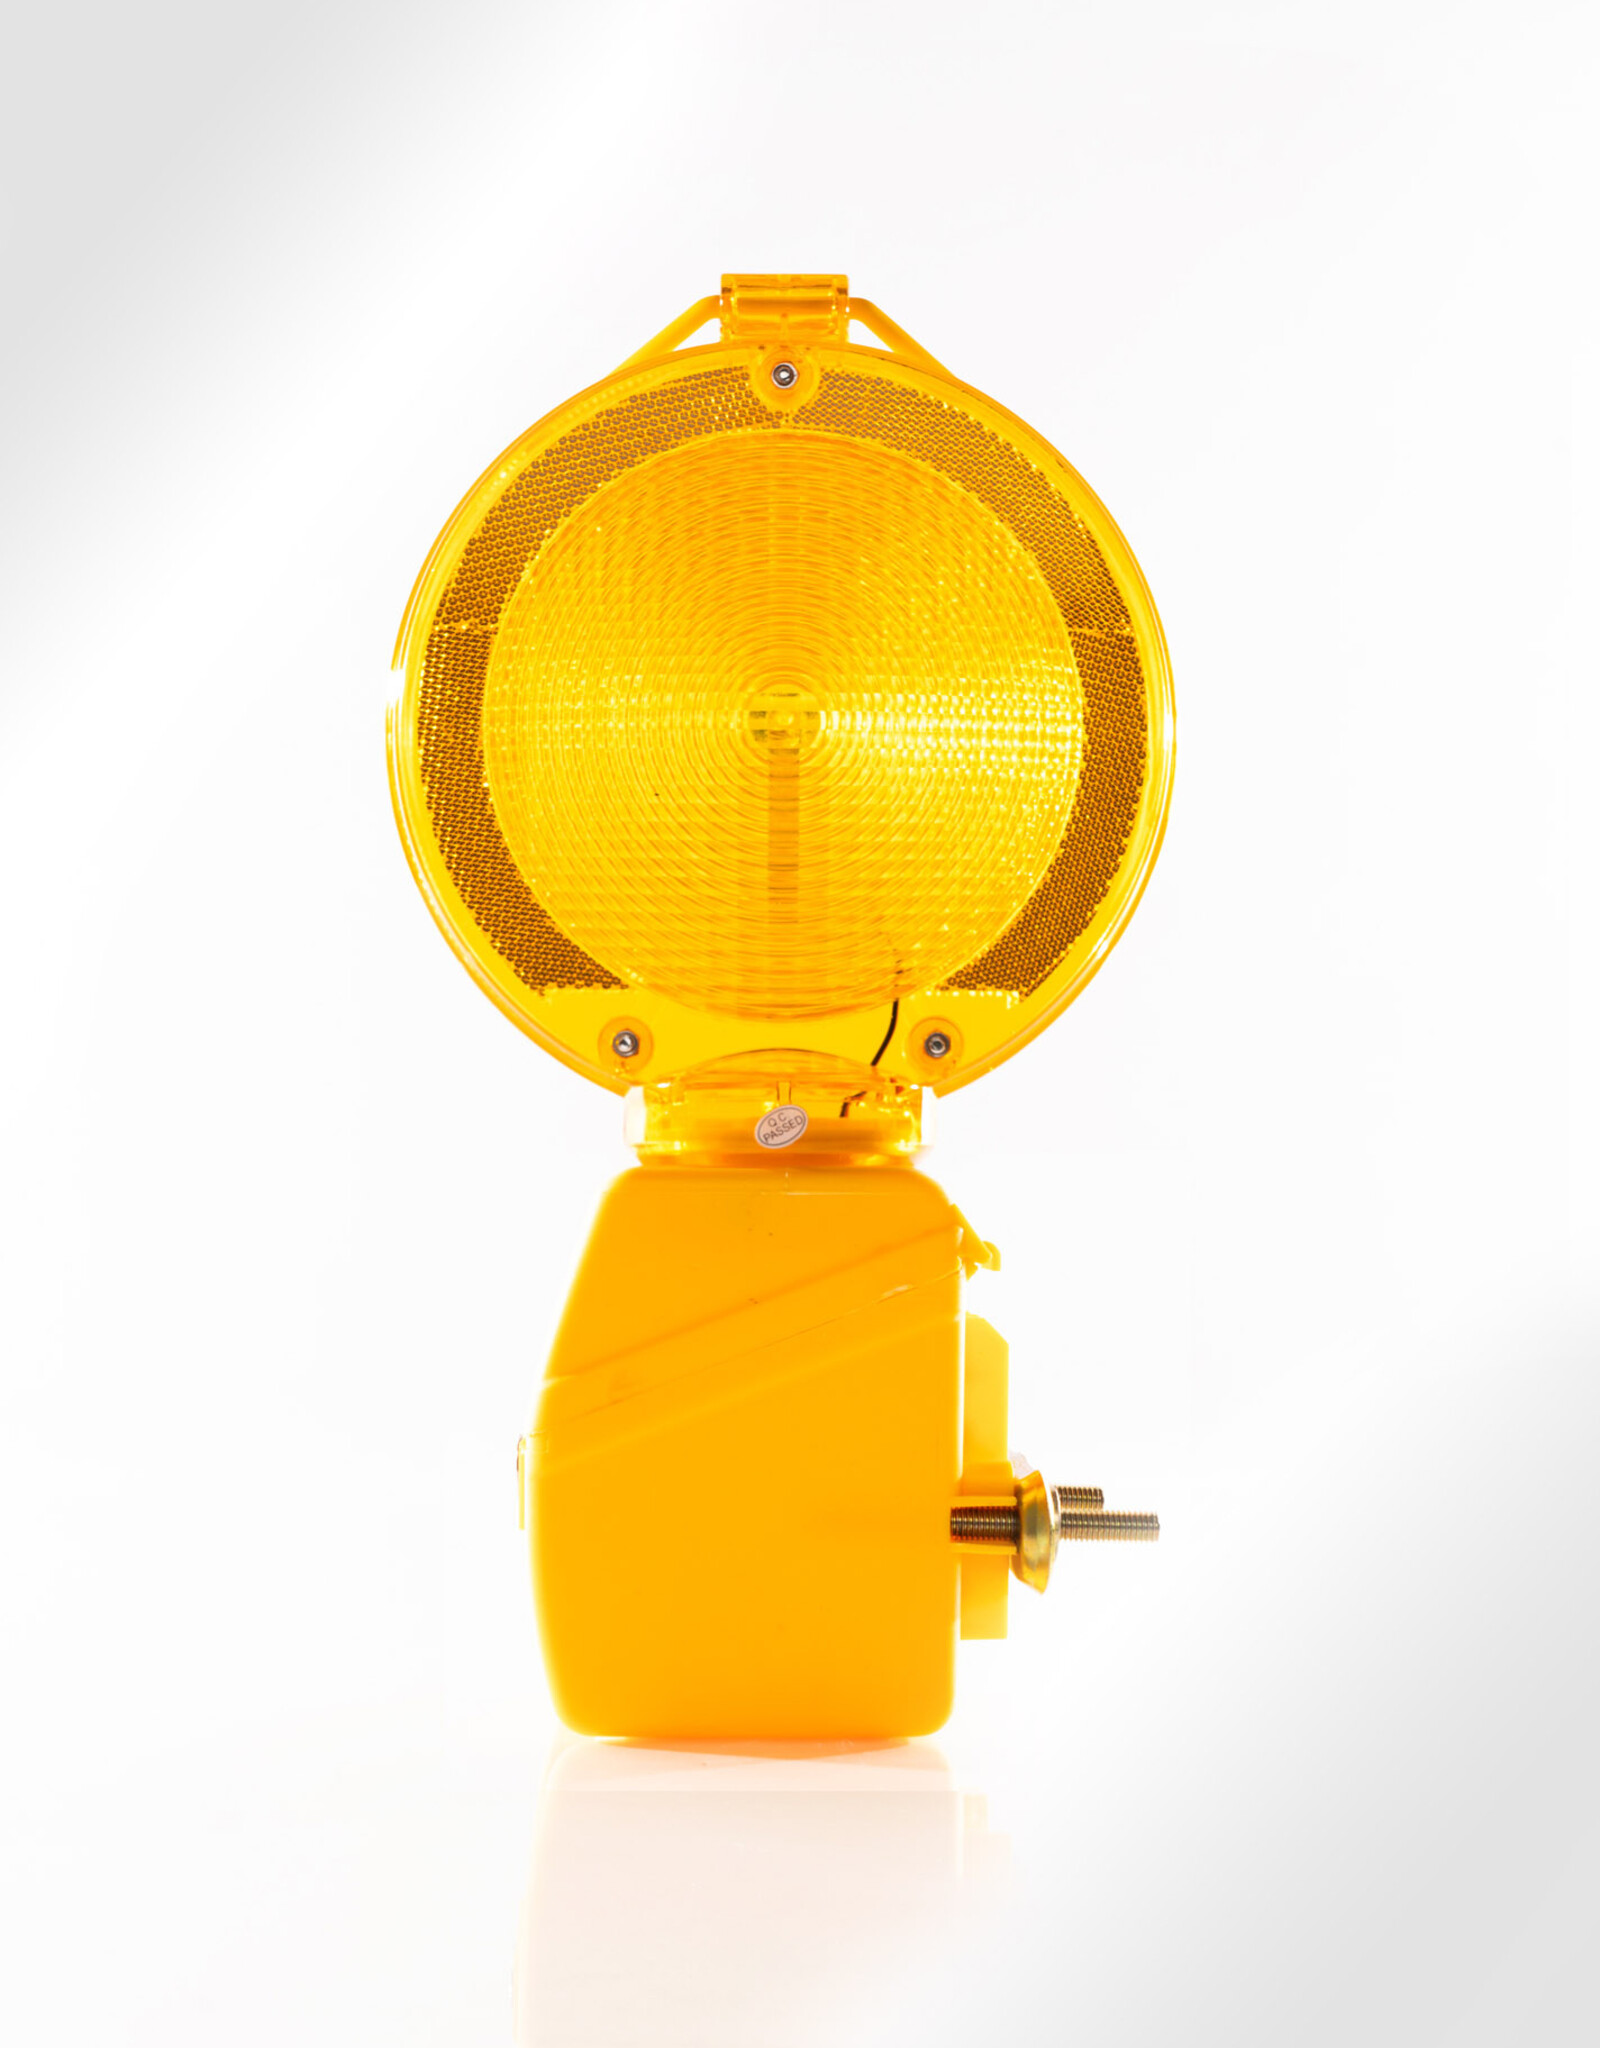 Ri-Traffic | Ministar 1000 6V, GEEL / Geleidebaken Lamp